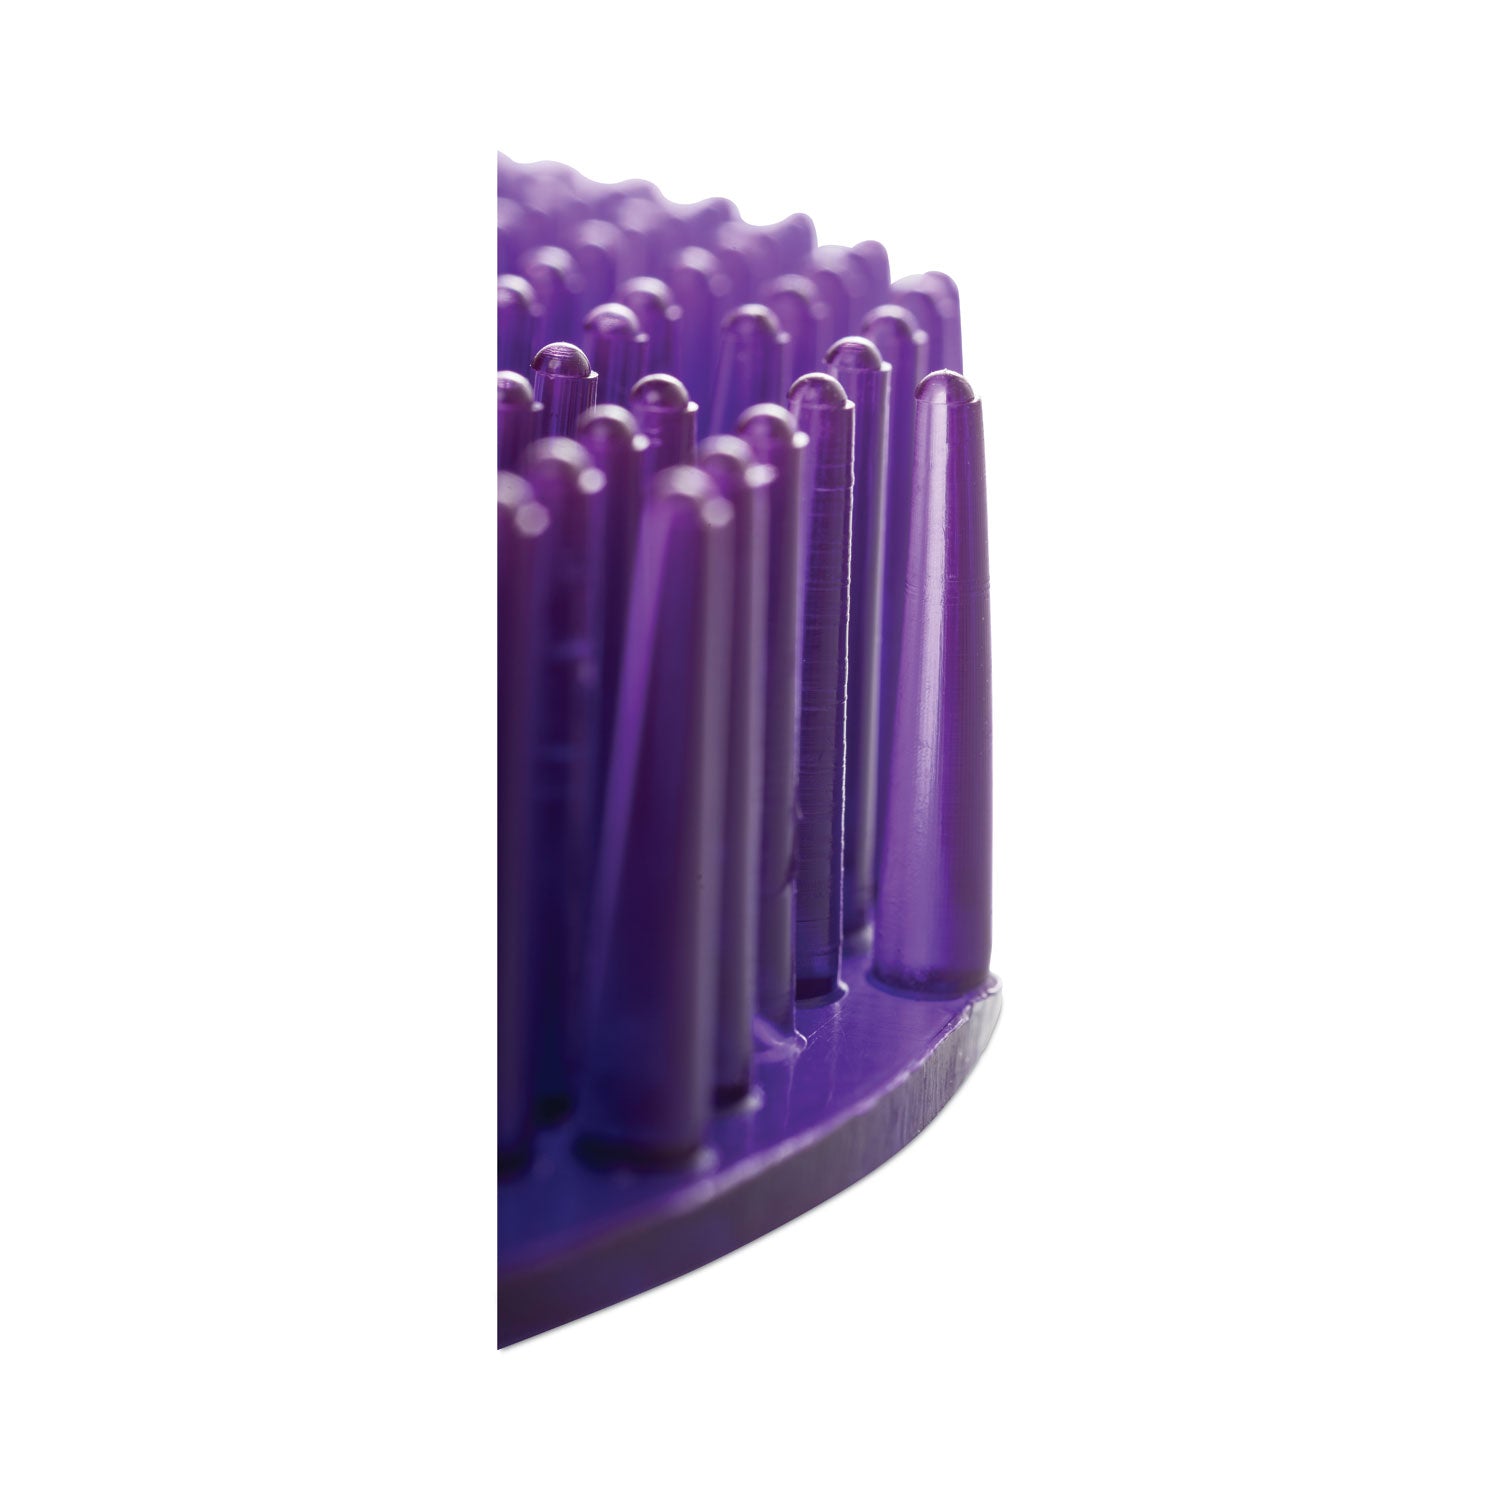 ekcoscreen-urinal-screens-berry-scent-purple-12-carton_dvoeks1p12 - 3